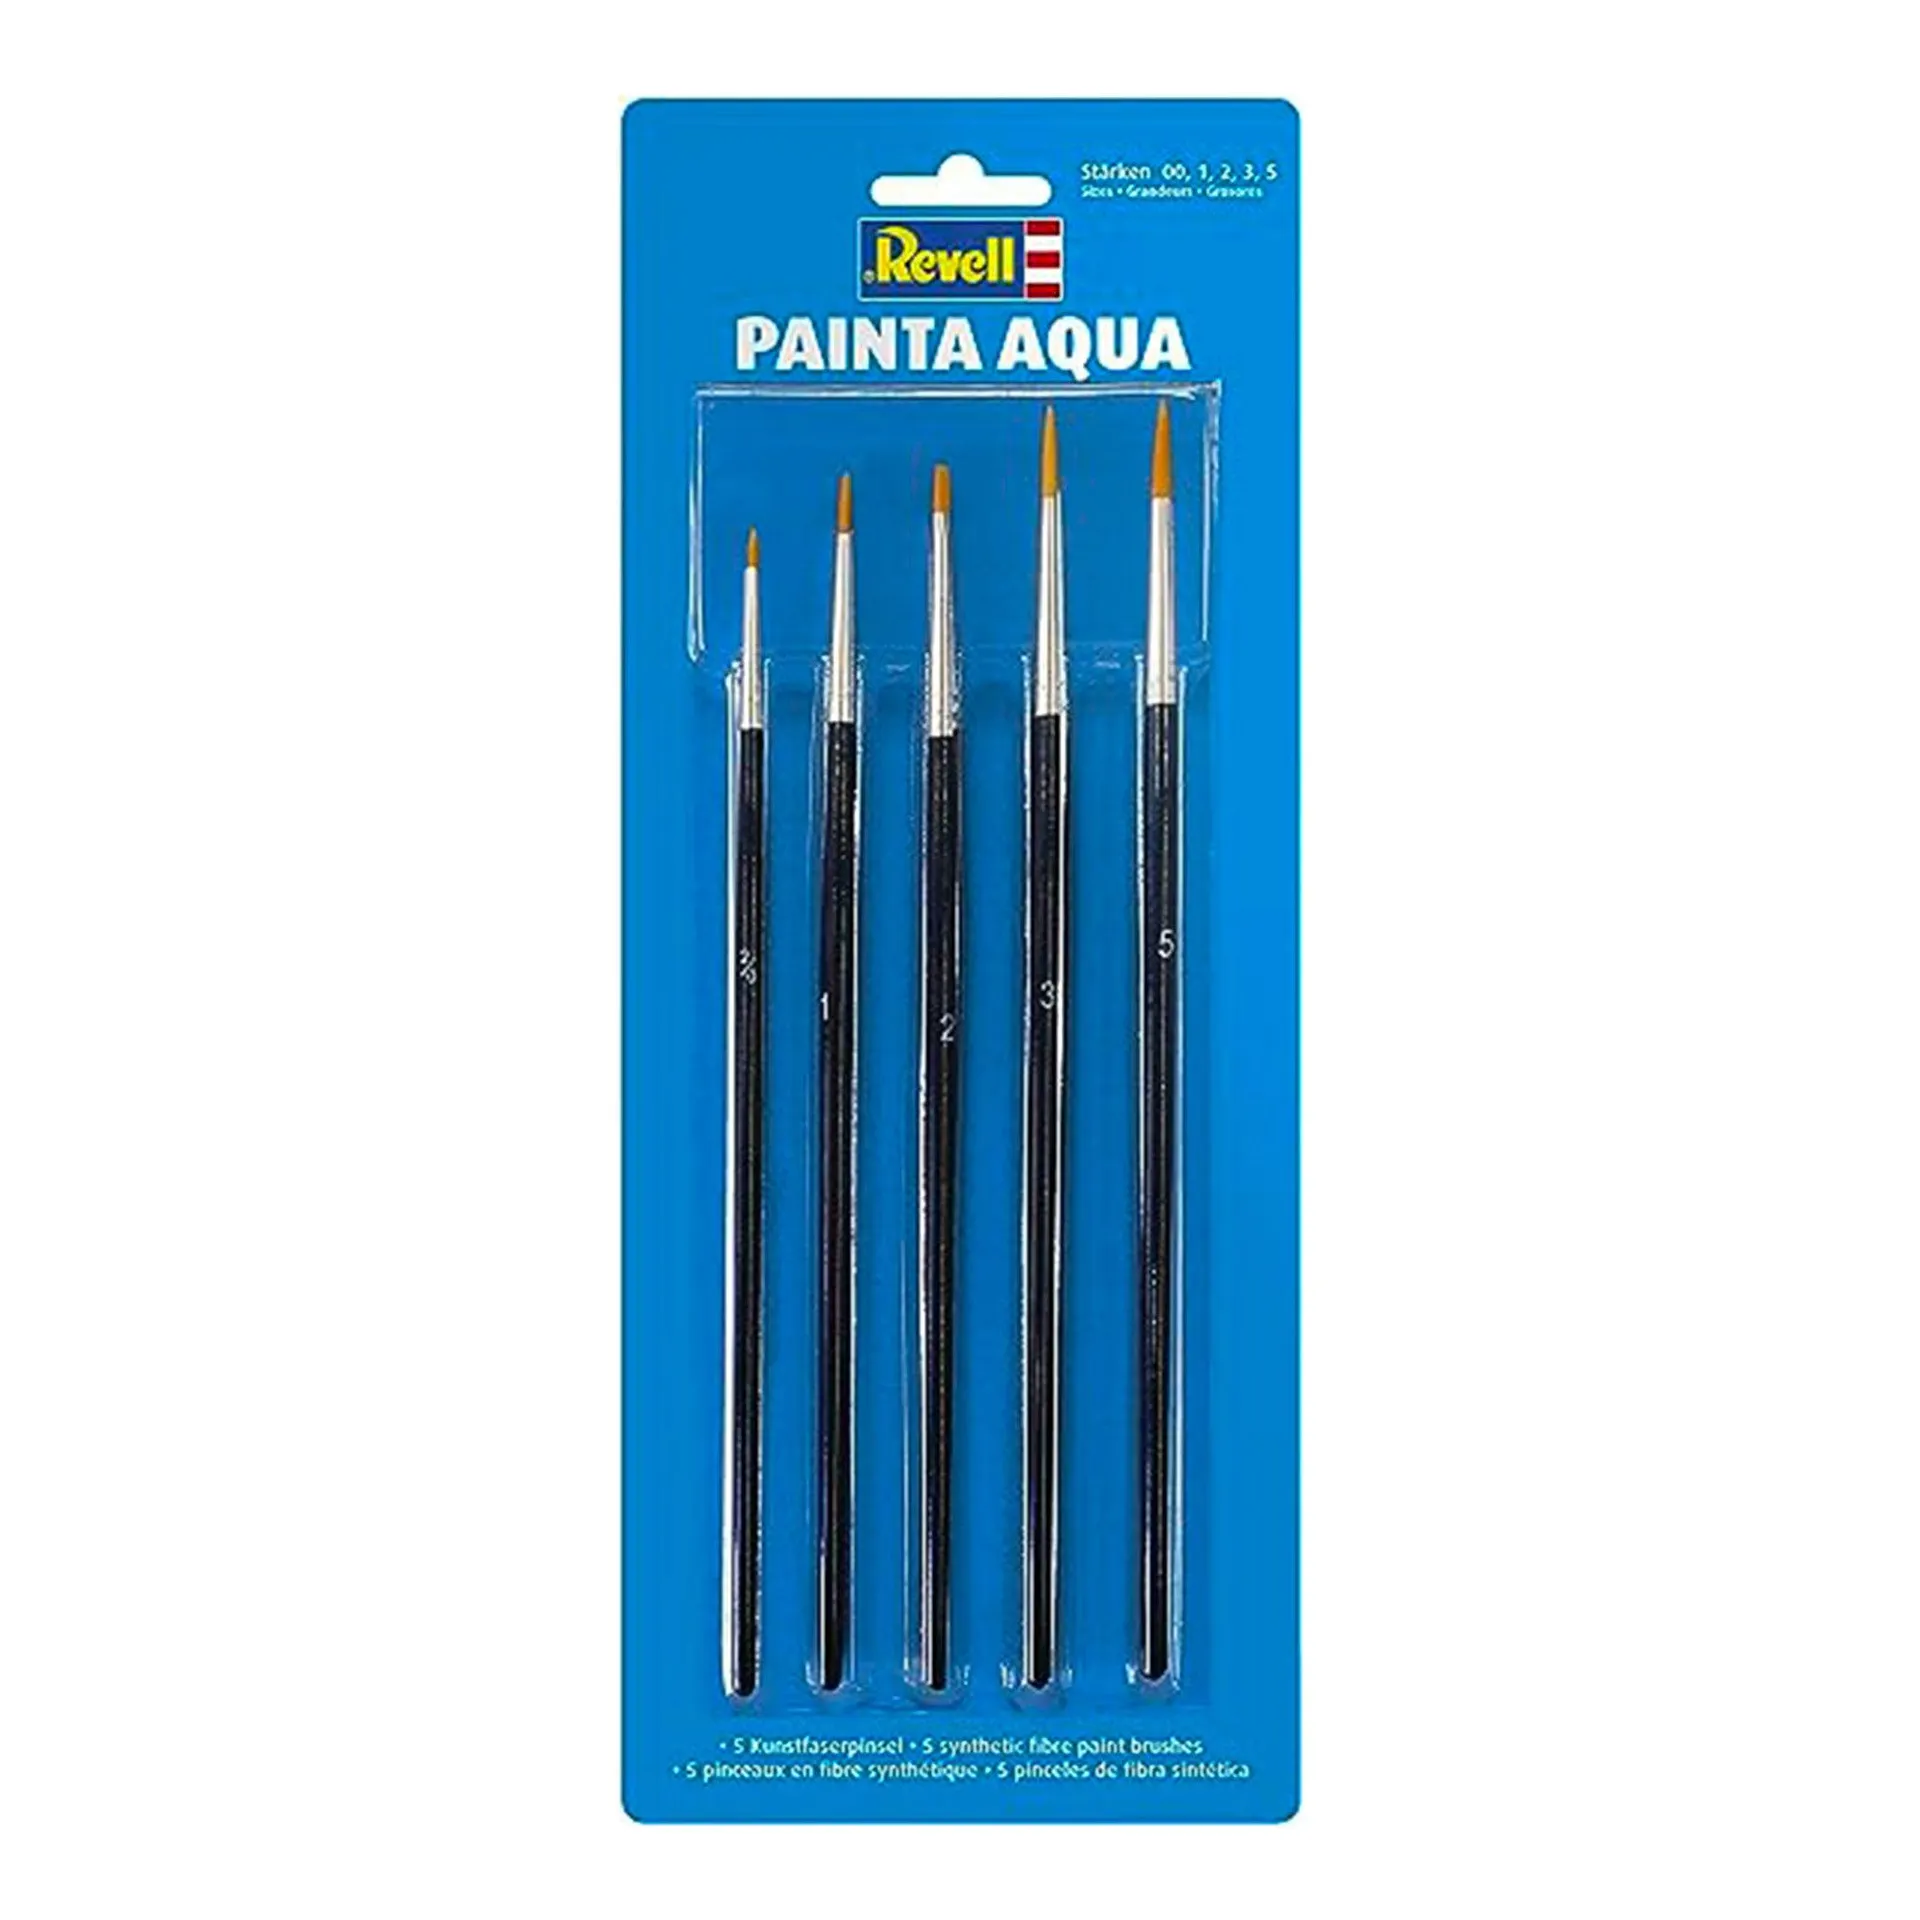 5-Piece Painta Aqua Paintbrush Set